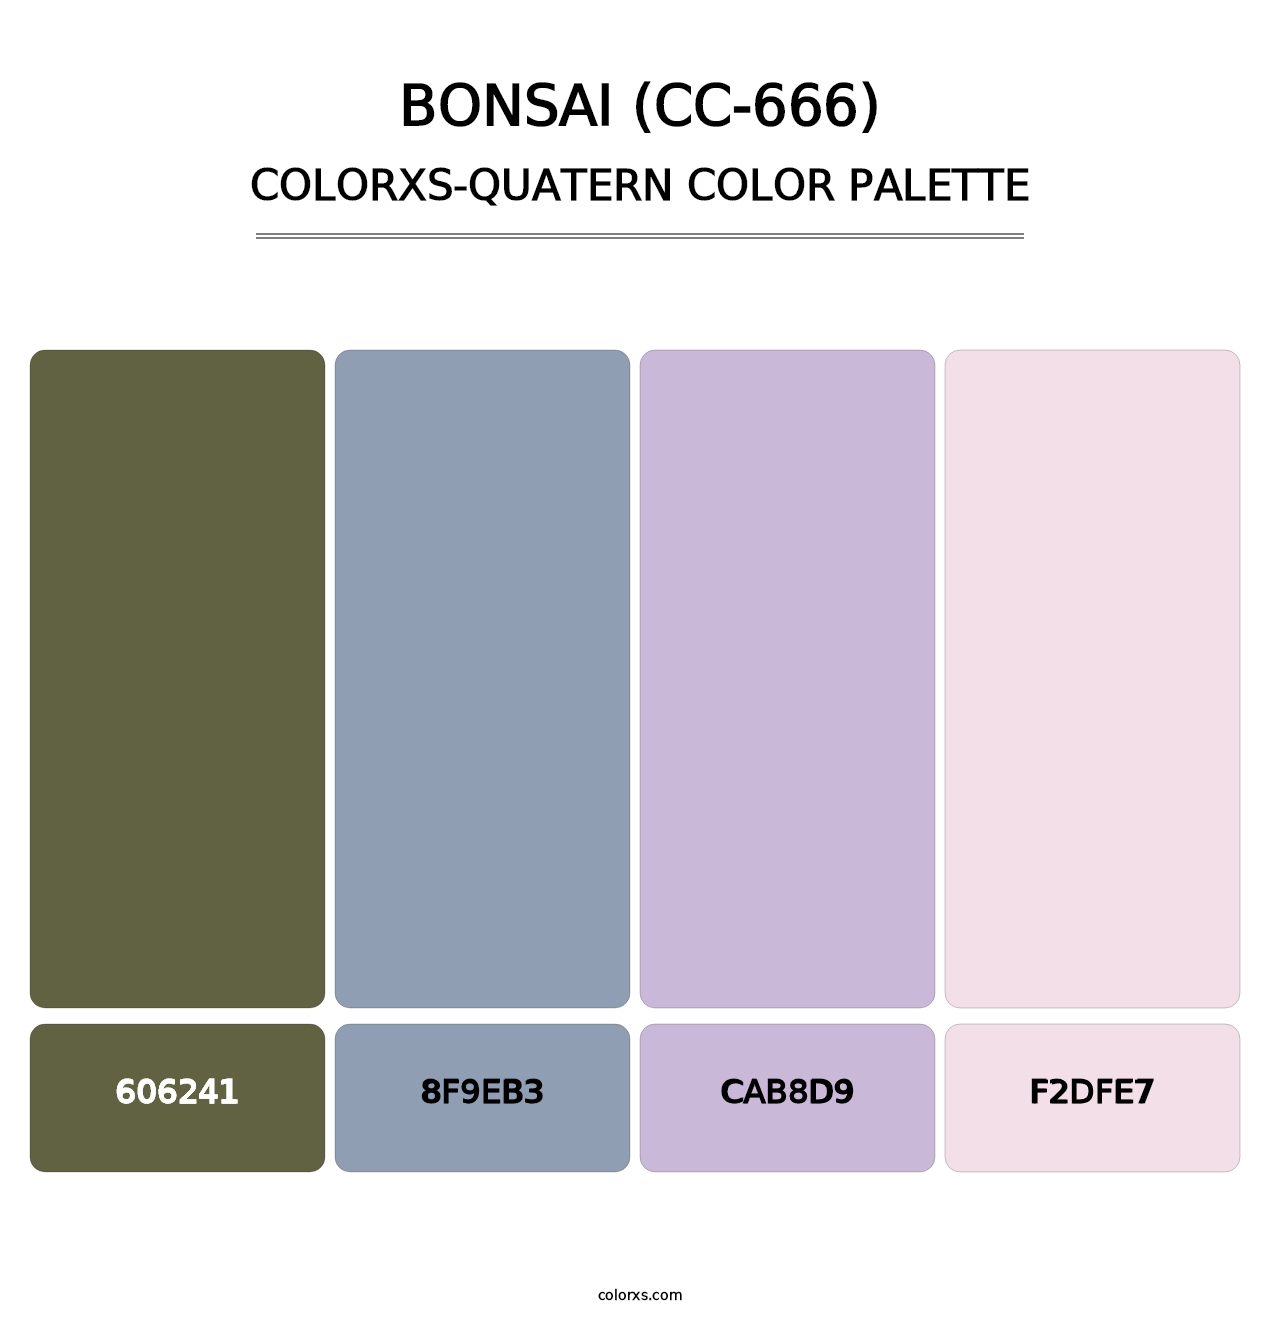 Bonsai (CC-666) - Colorxs Quatern Palette